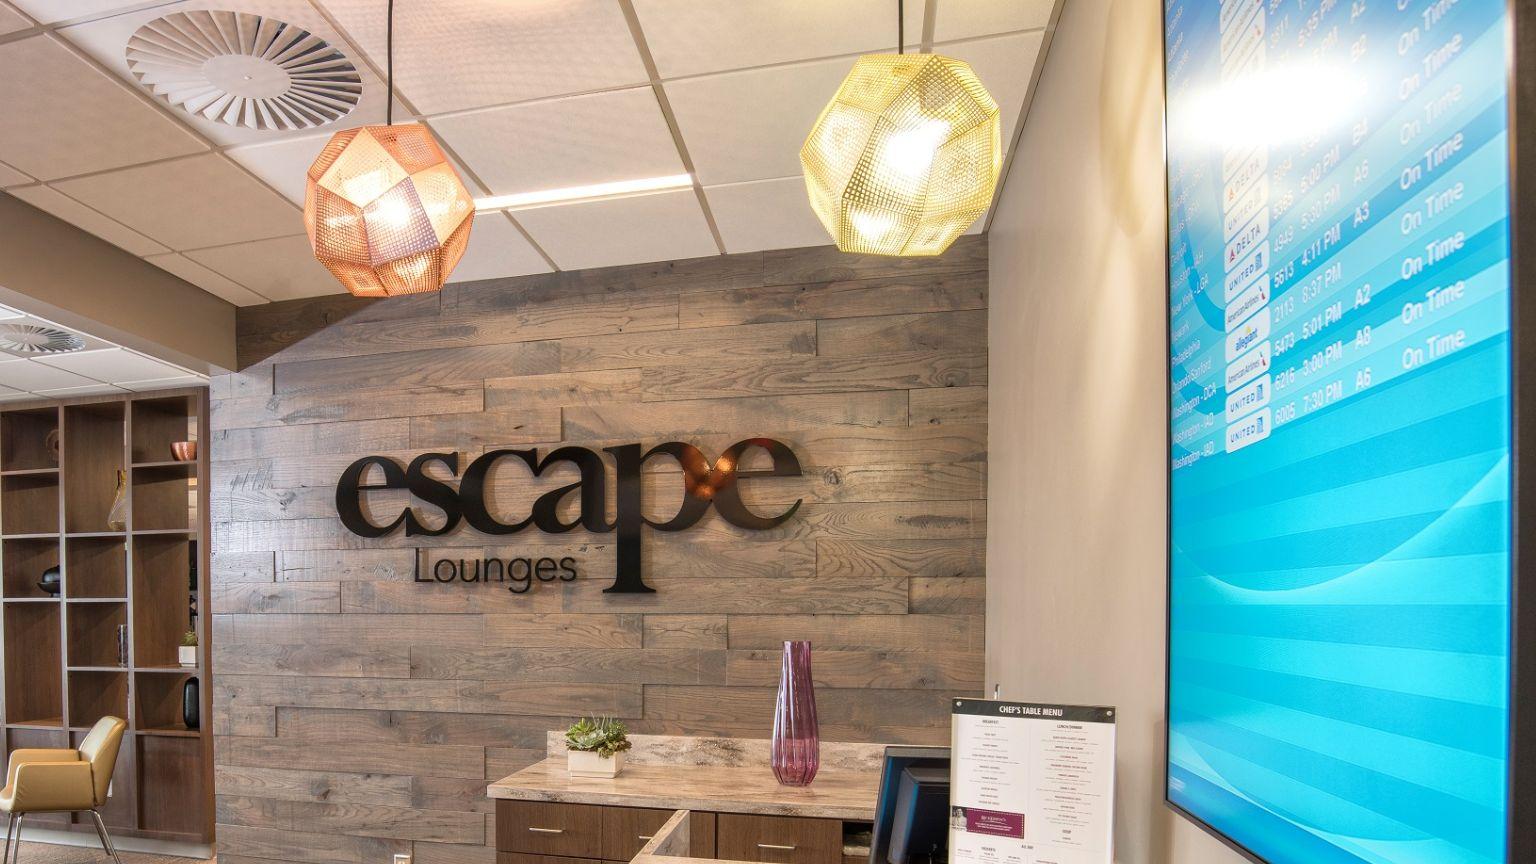 Escape Lounge GSP Airport, Concourse B